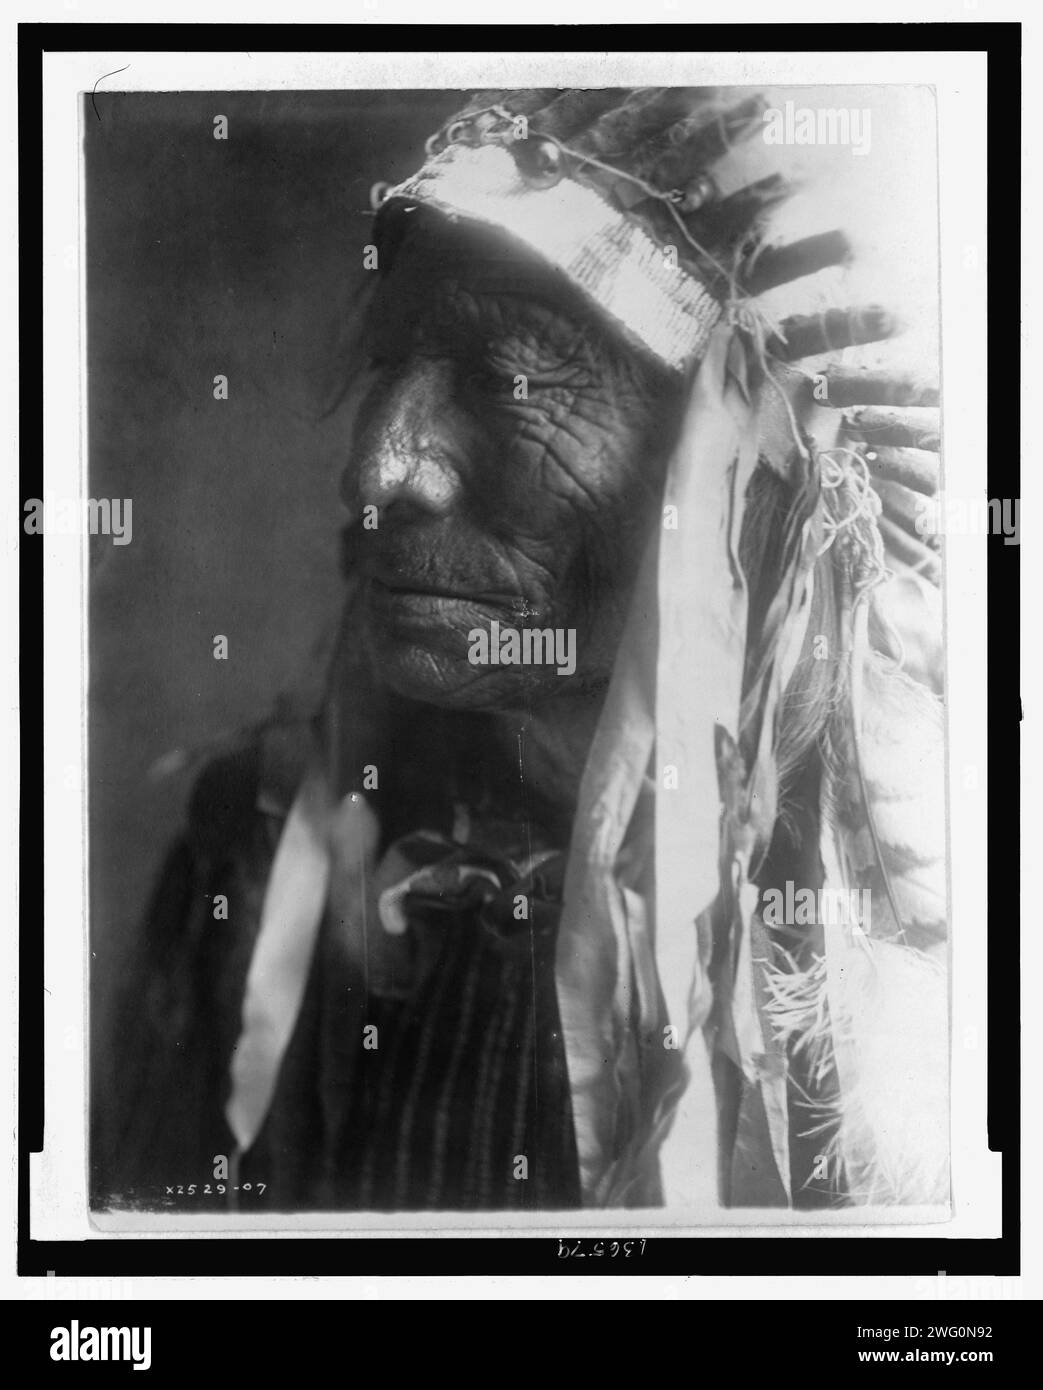 Fast Elk (Hexaka Luzahan), c1907. American Indian man, head-and-shoulders portrait, facing left. Stock Photo